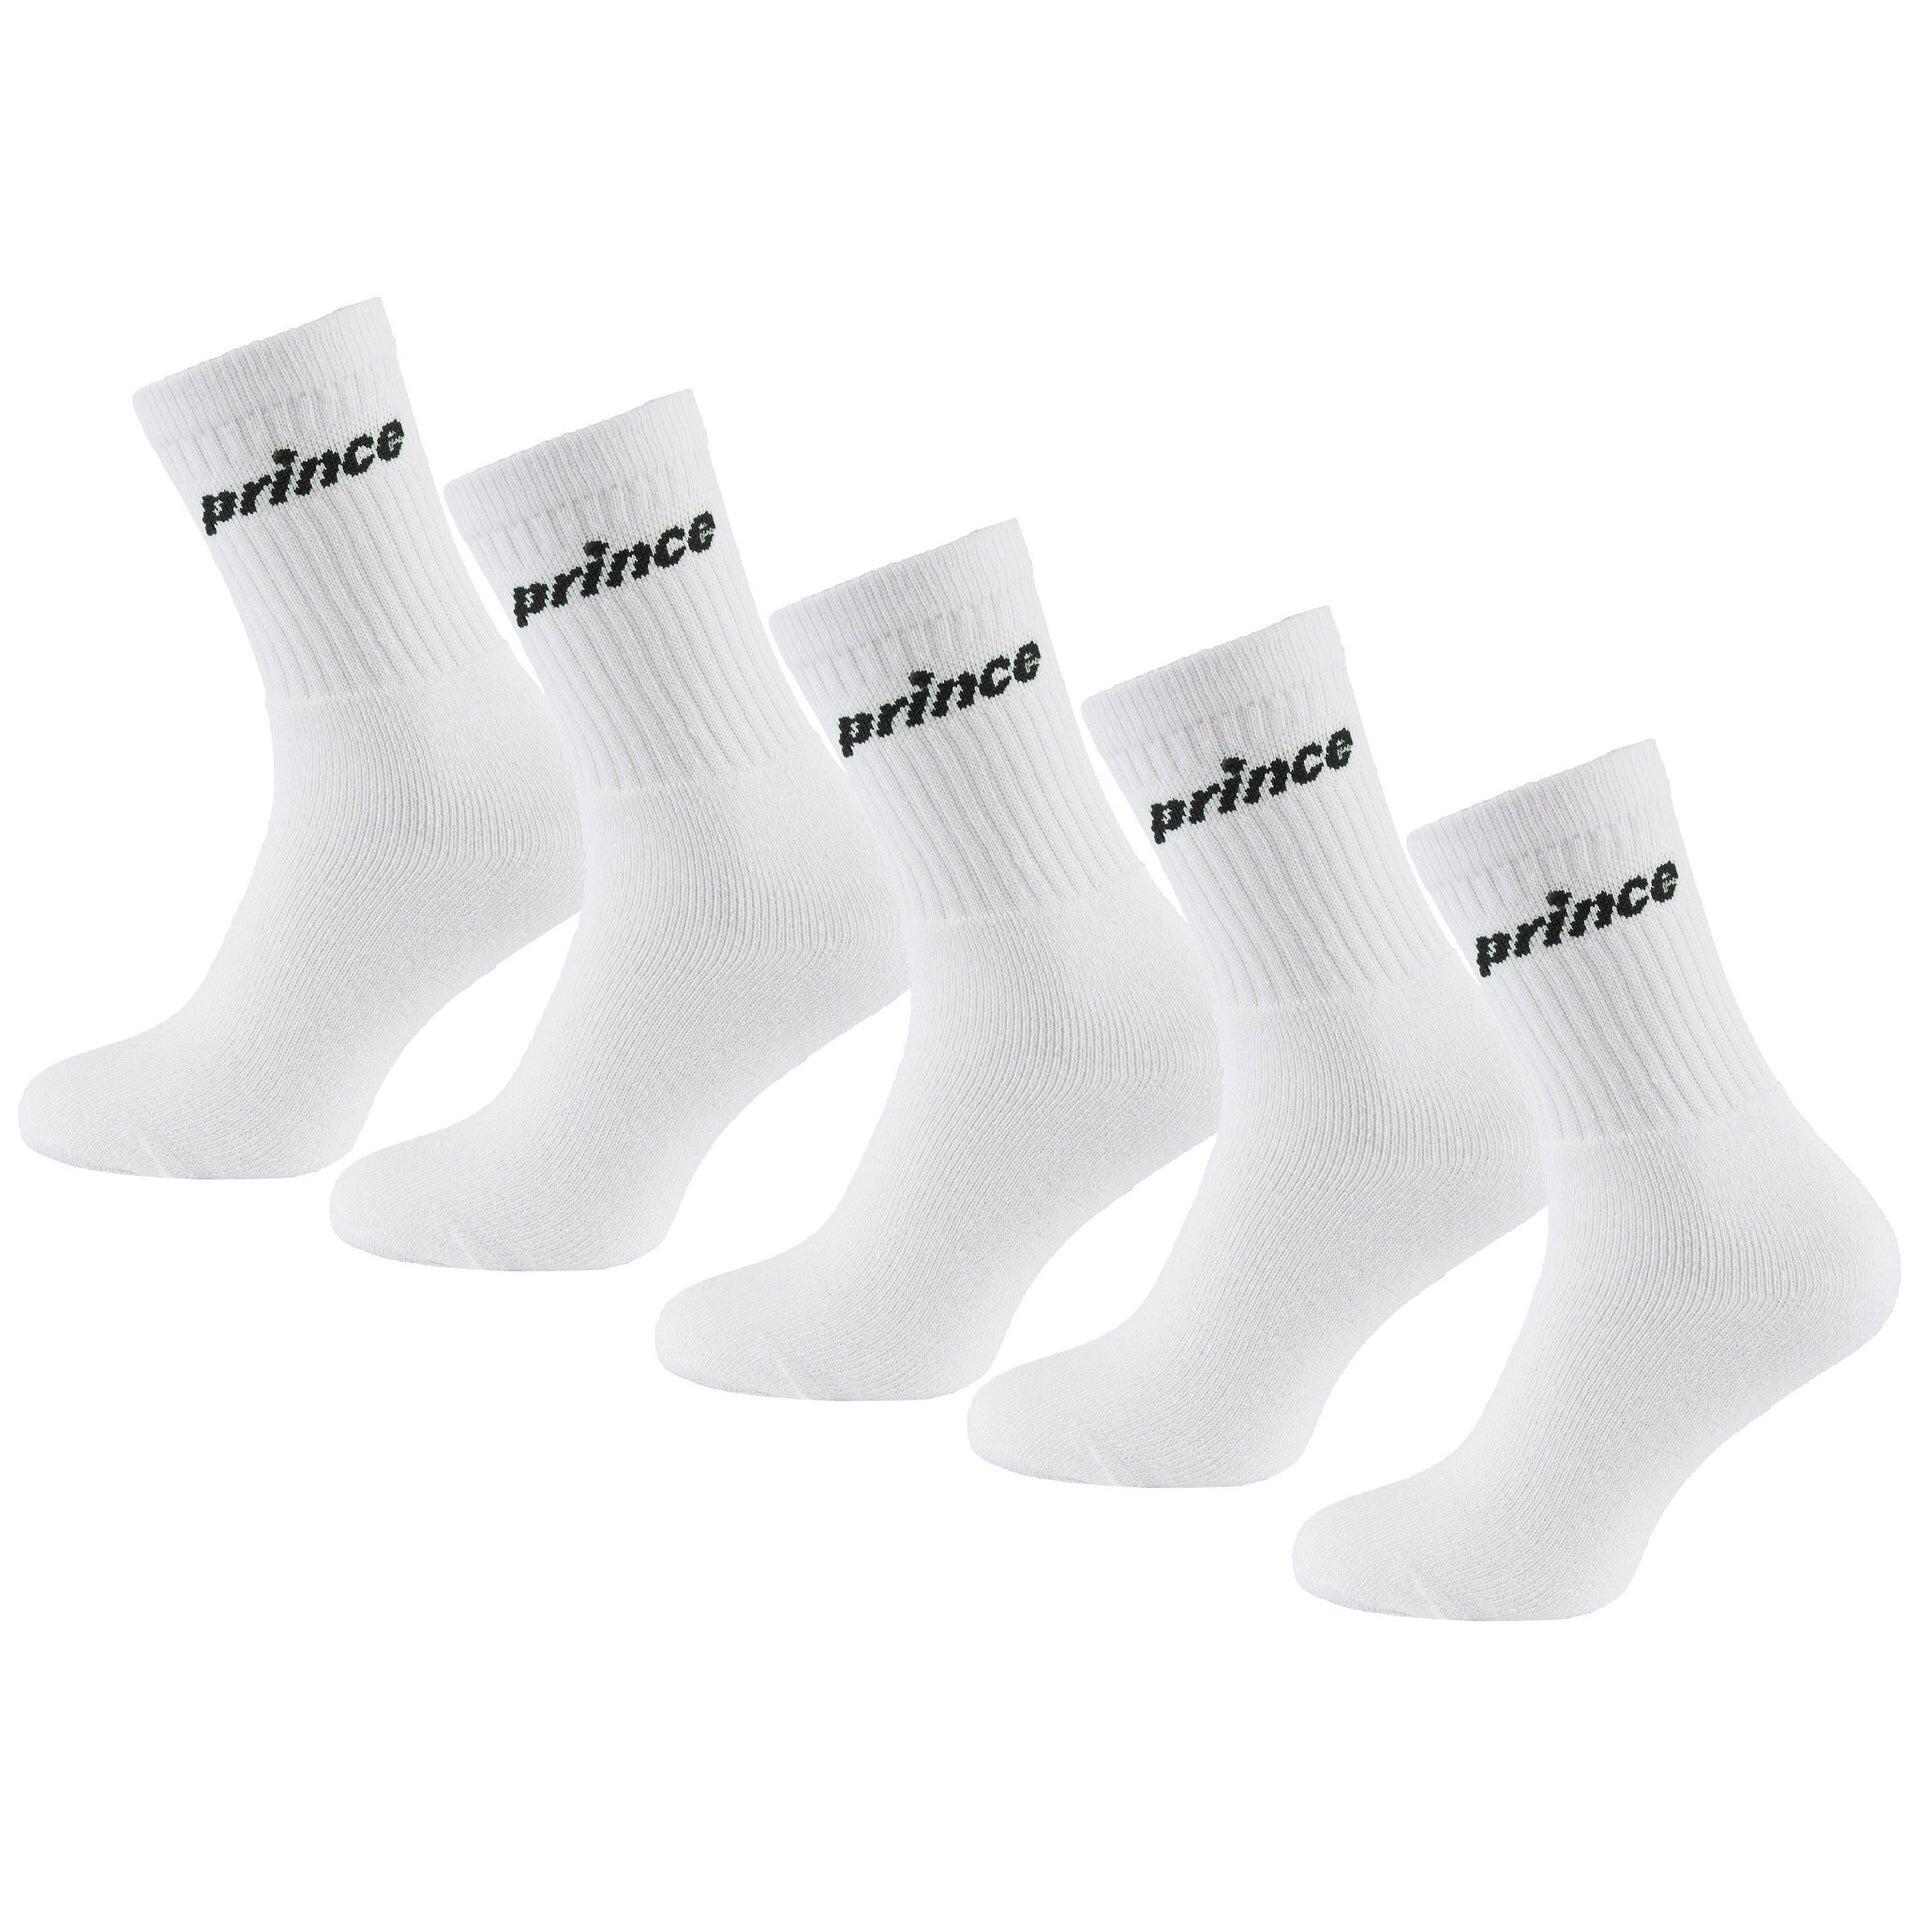 Prince Mens White Socks 5 pairs per pack 1/3